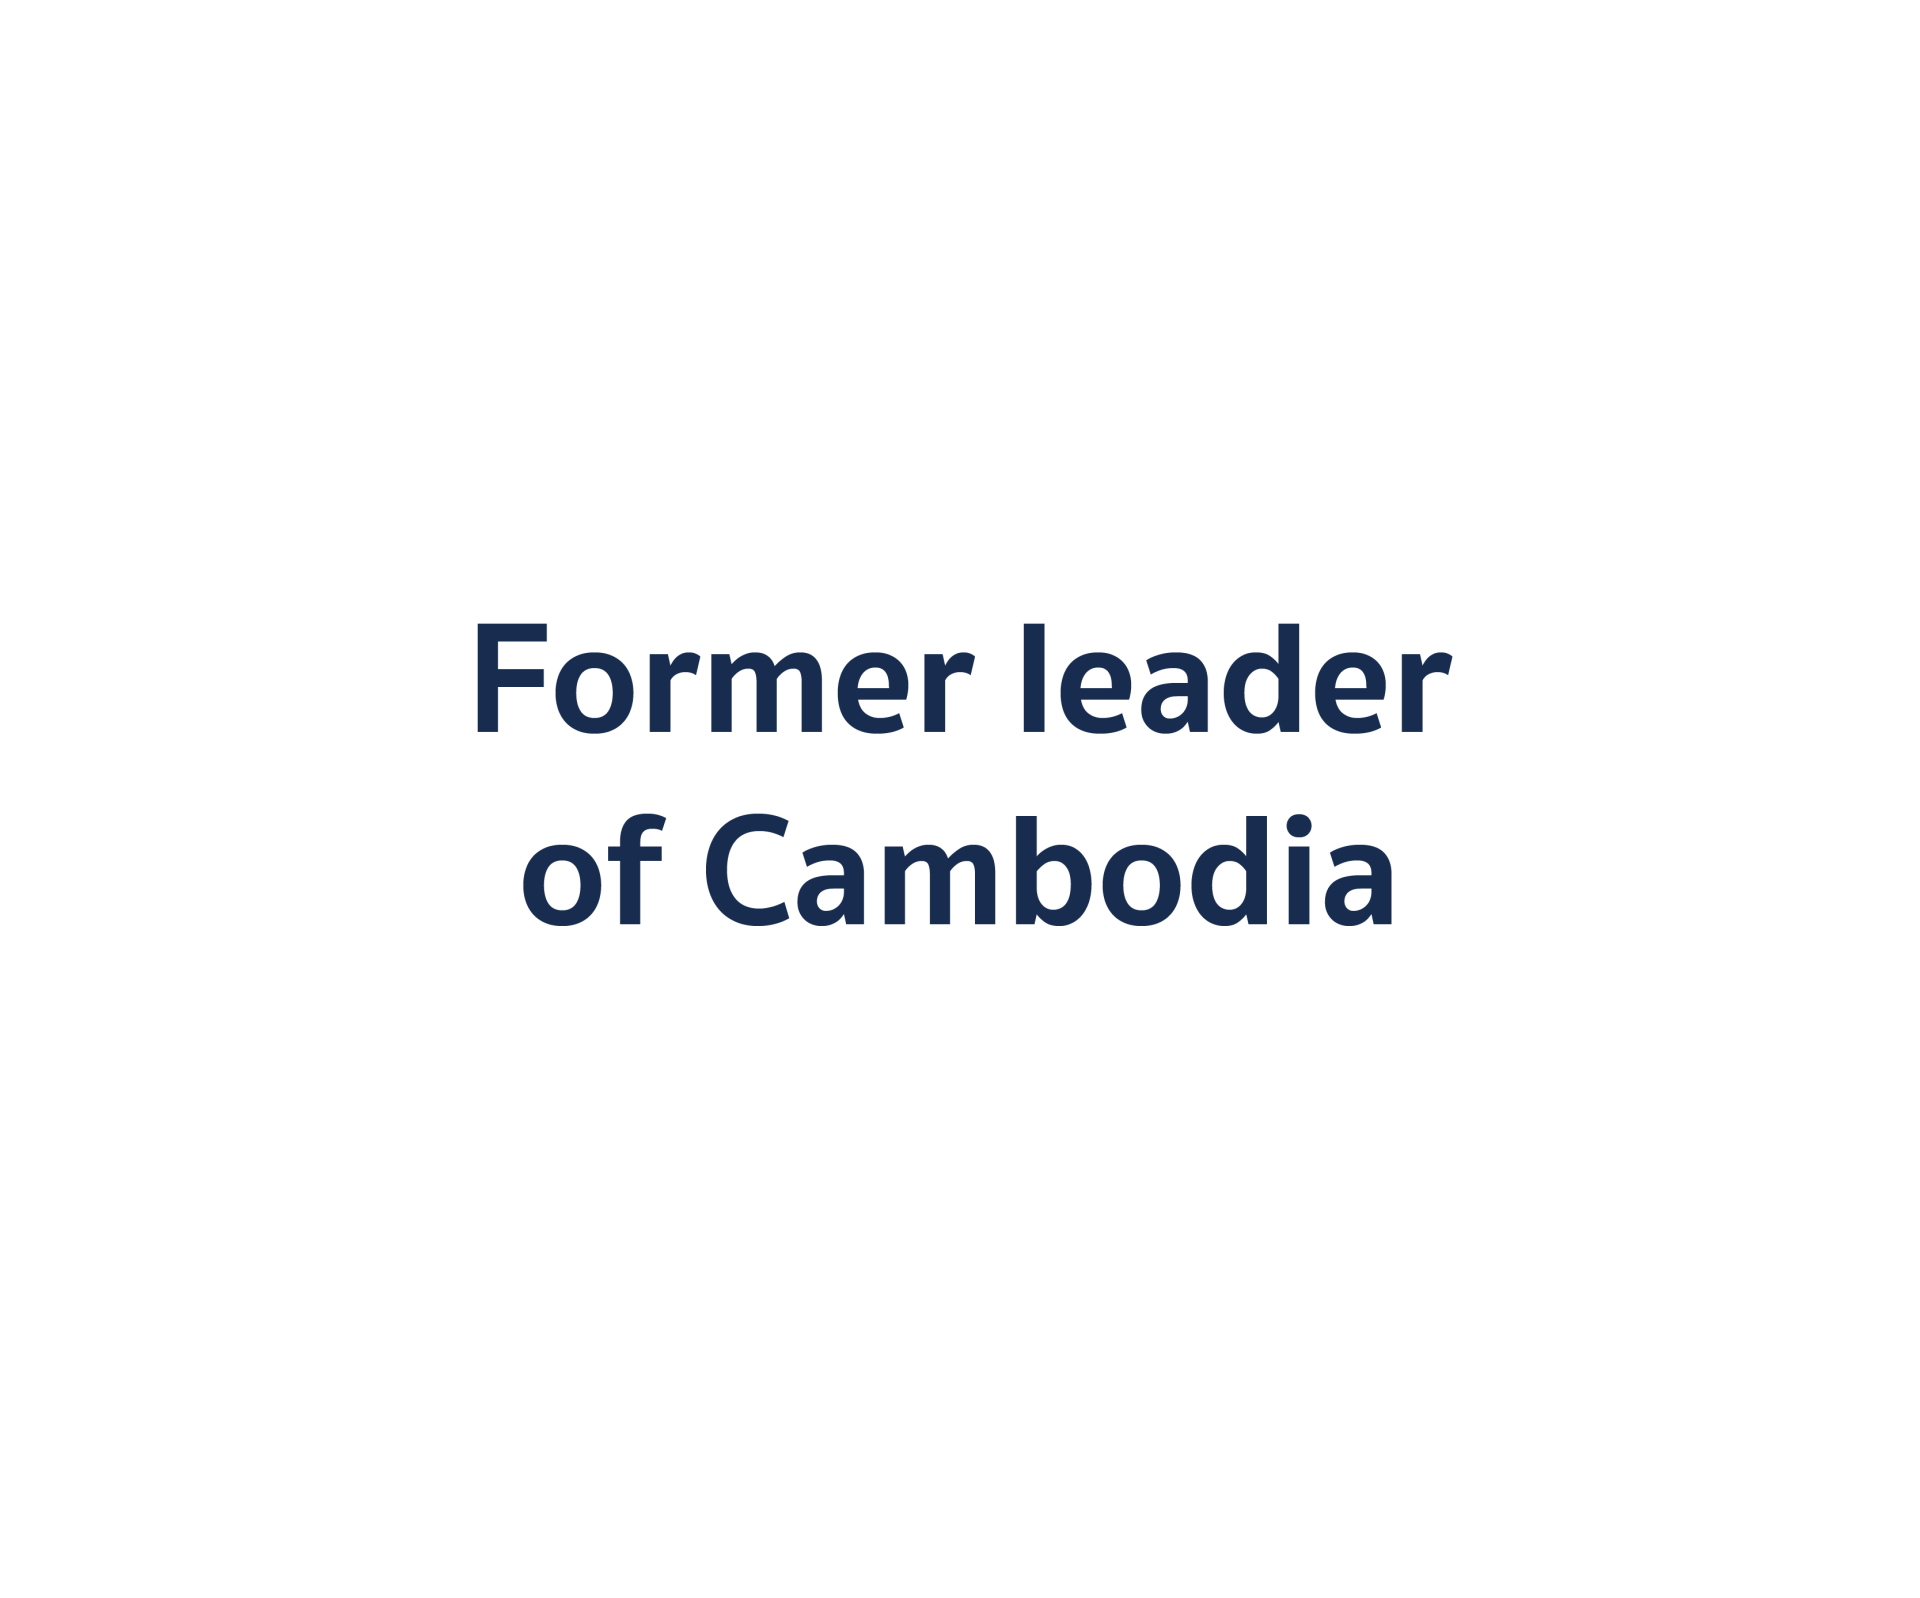 LED - Former leader of Cambodia